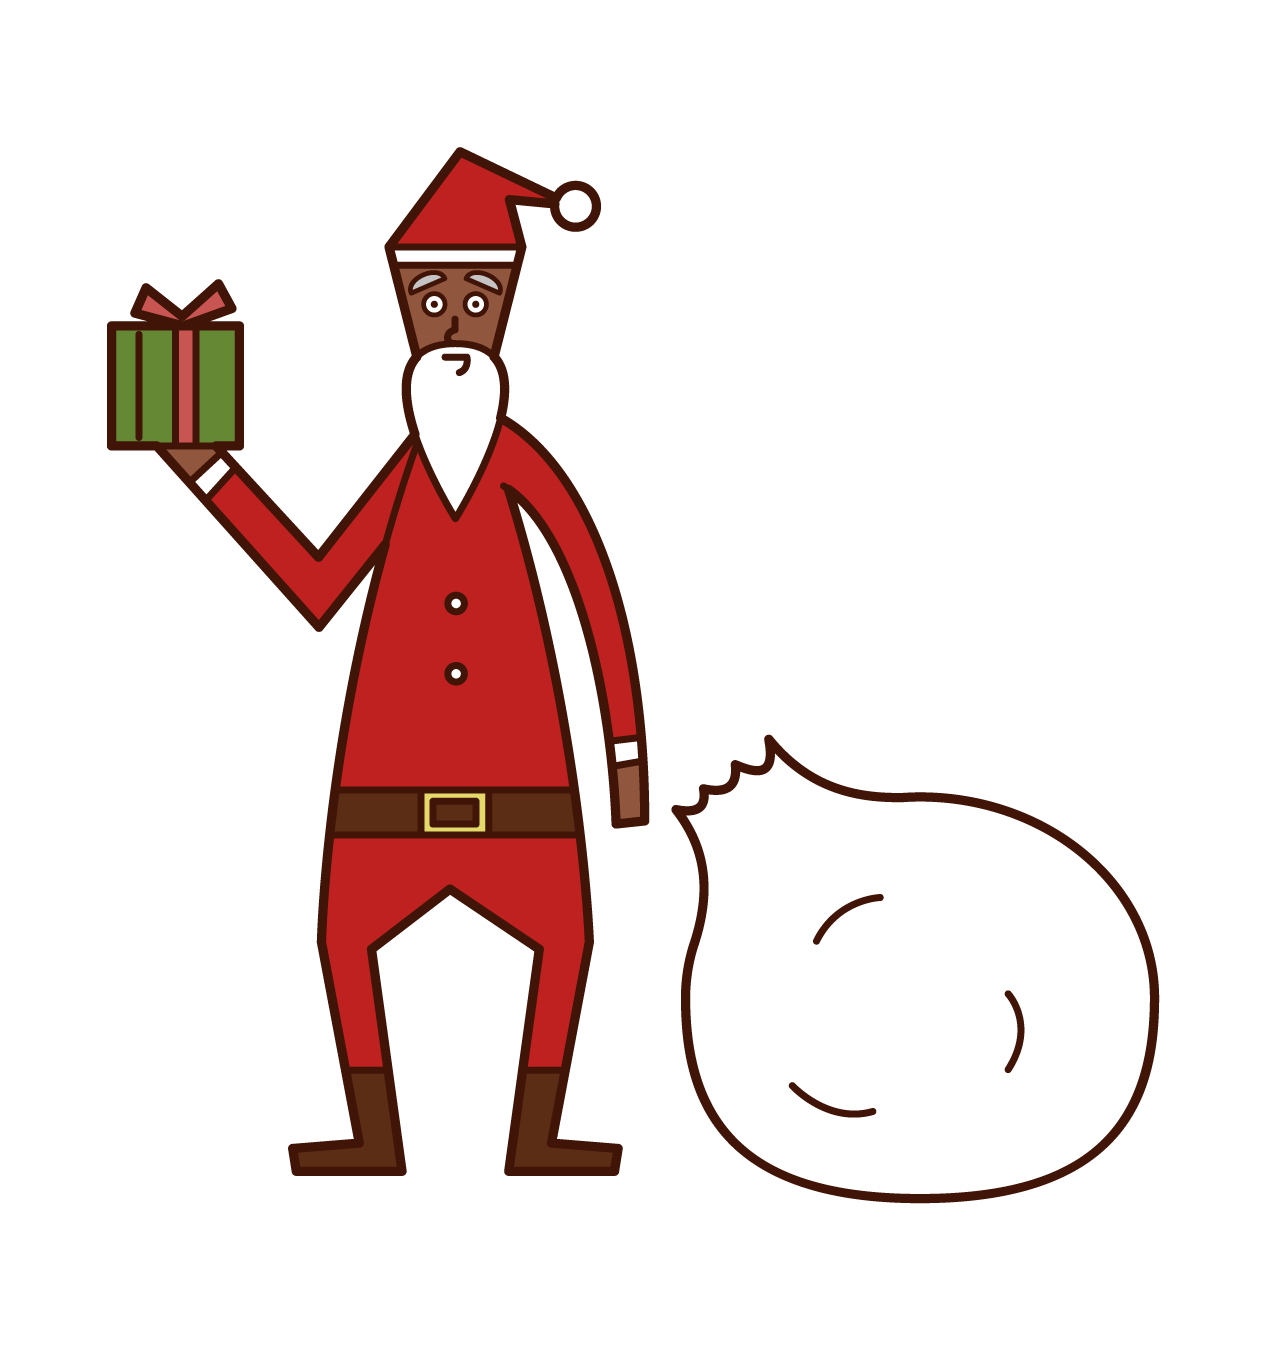 Illustration of Santa Claus passing a present